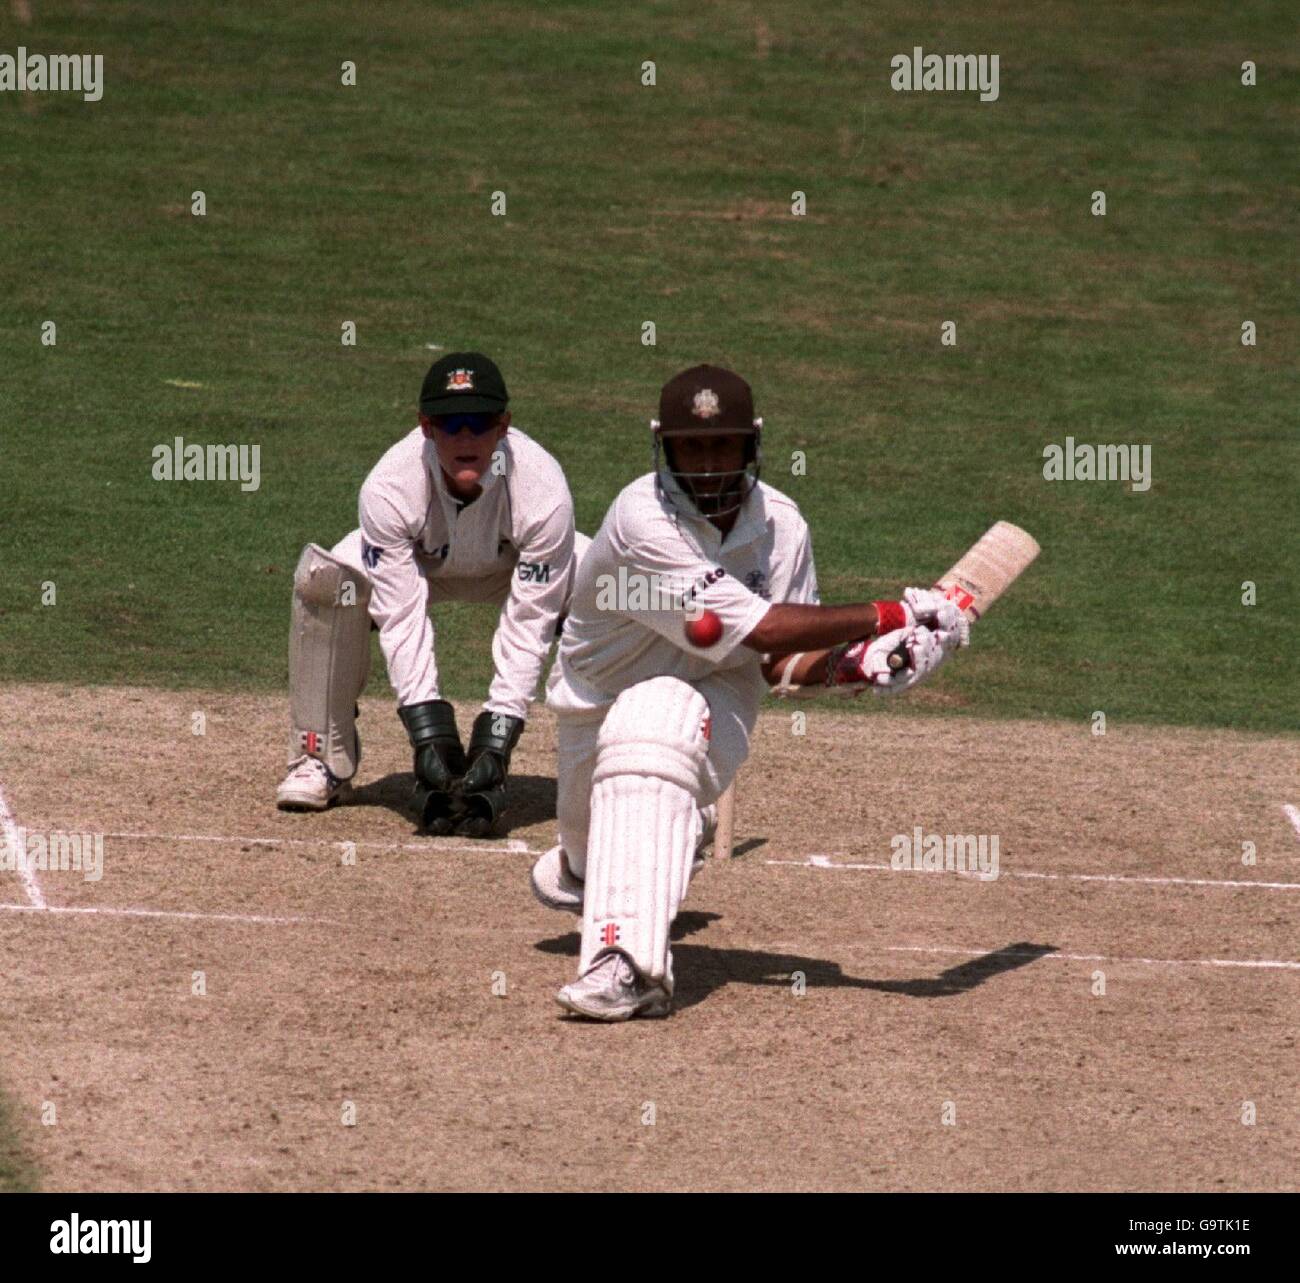 Surrey's Nadeem Shahid batting against Nottinghamshire's Richard Stemp Stock Photo